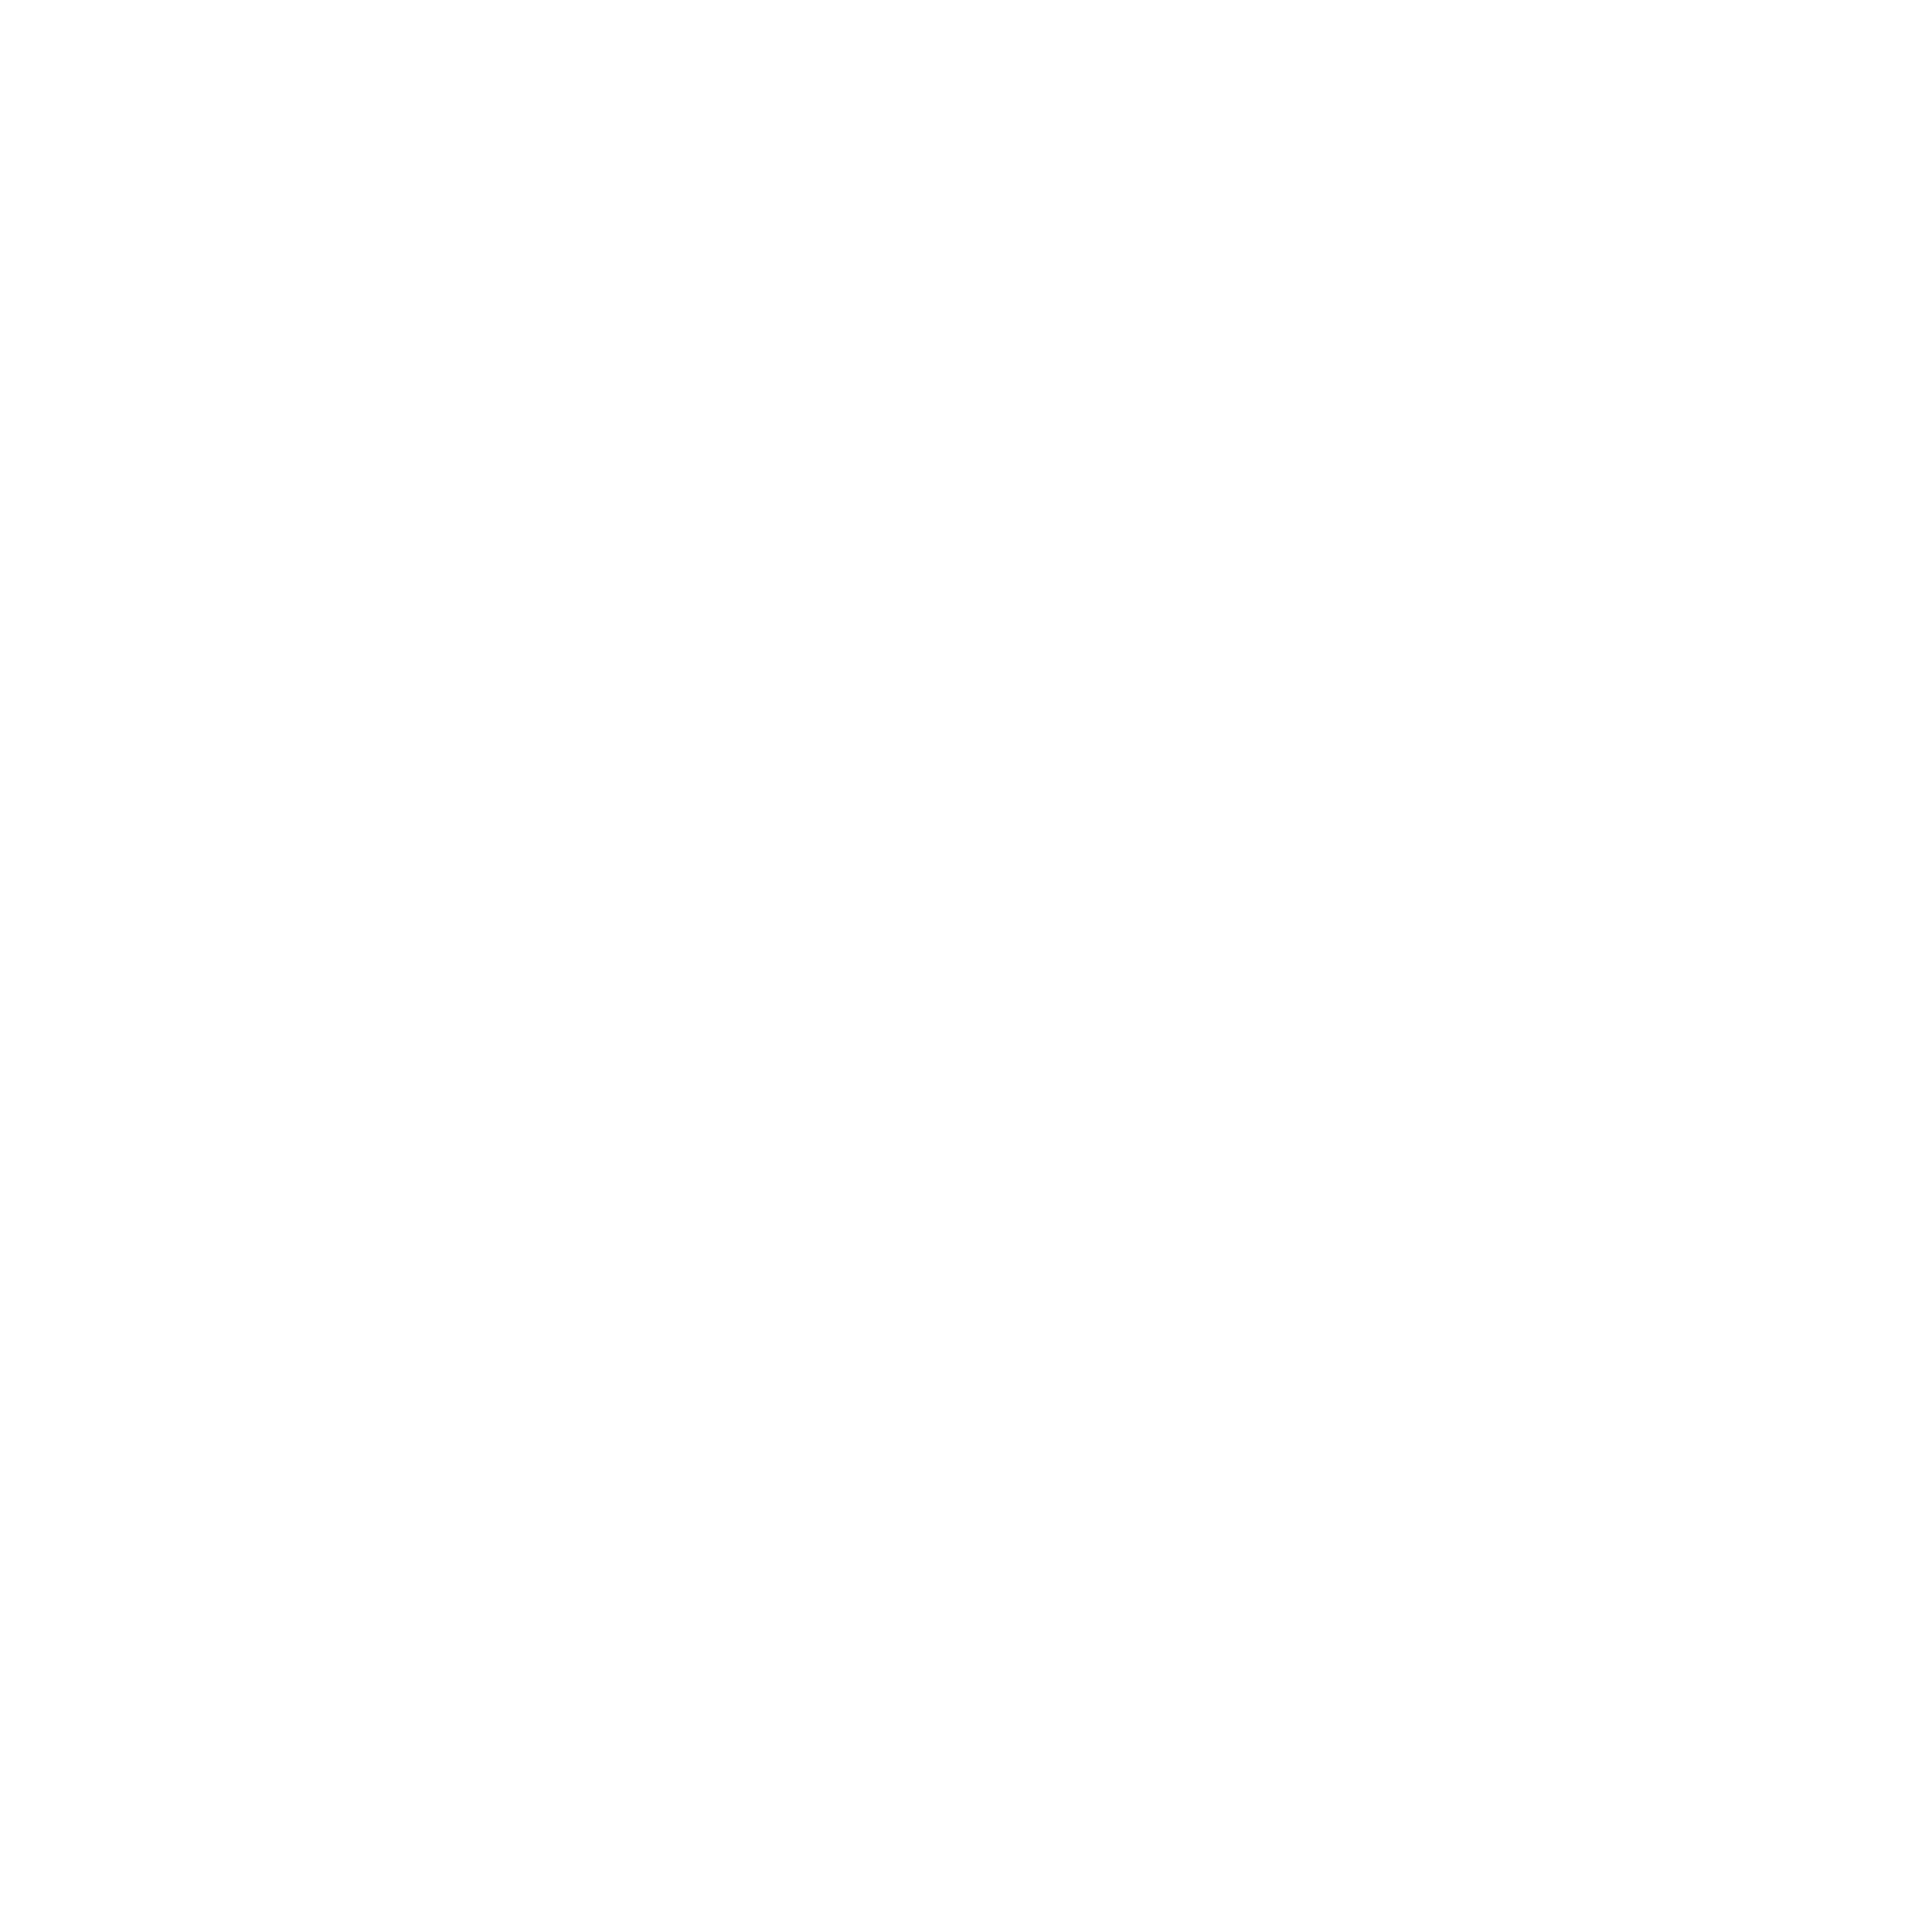 Chromogenia agencia Creativa